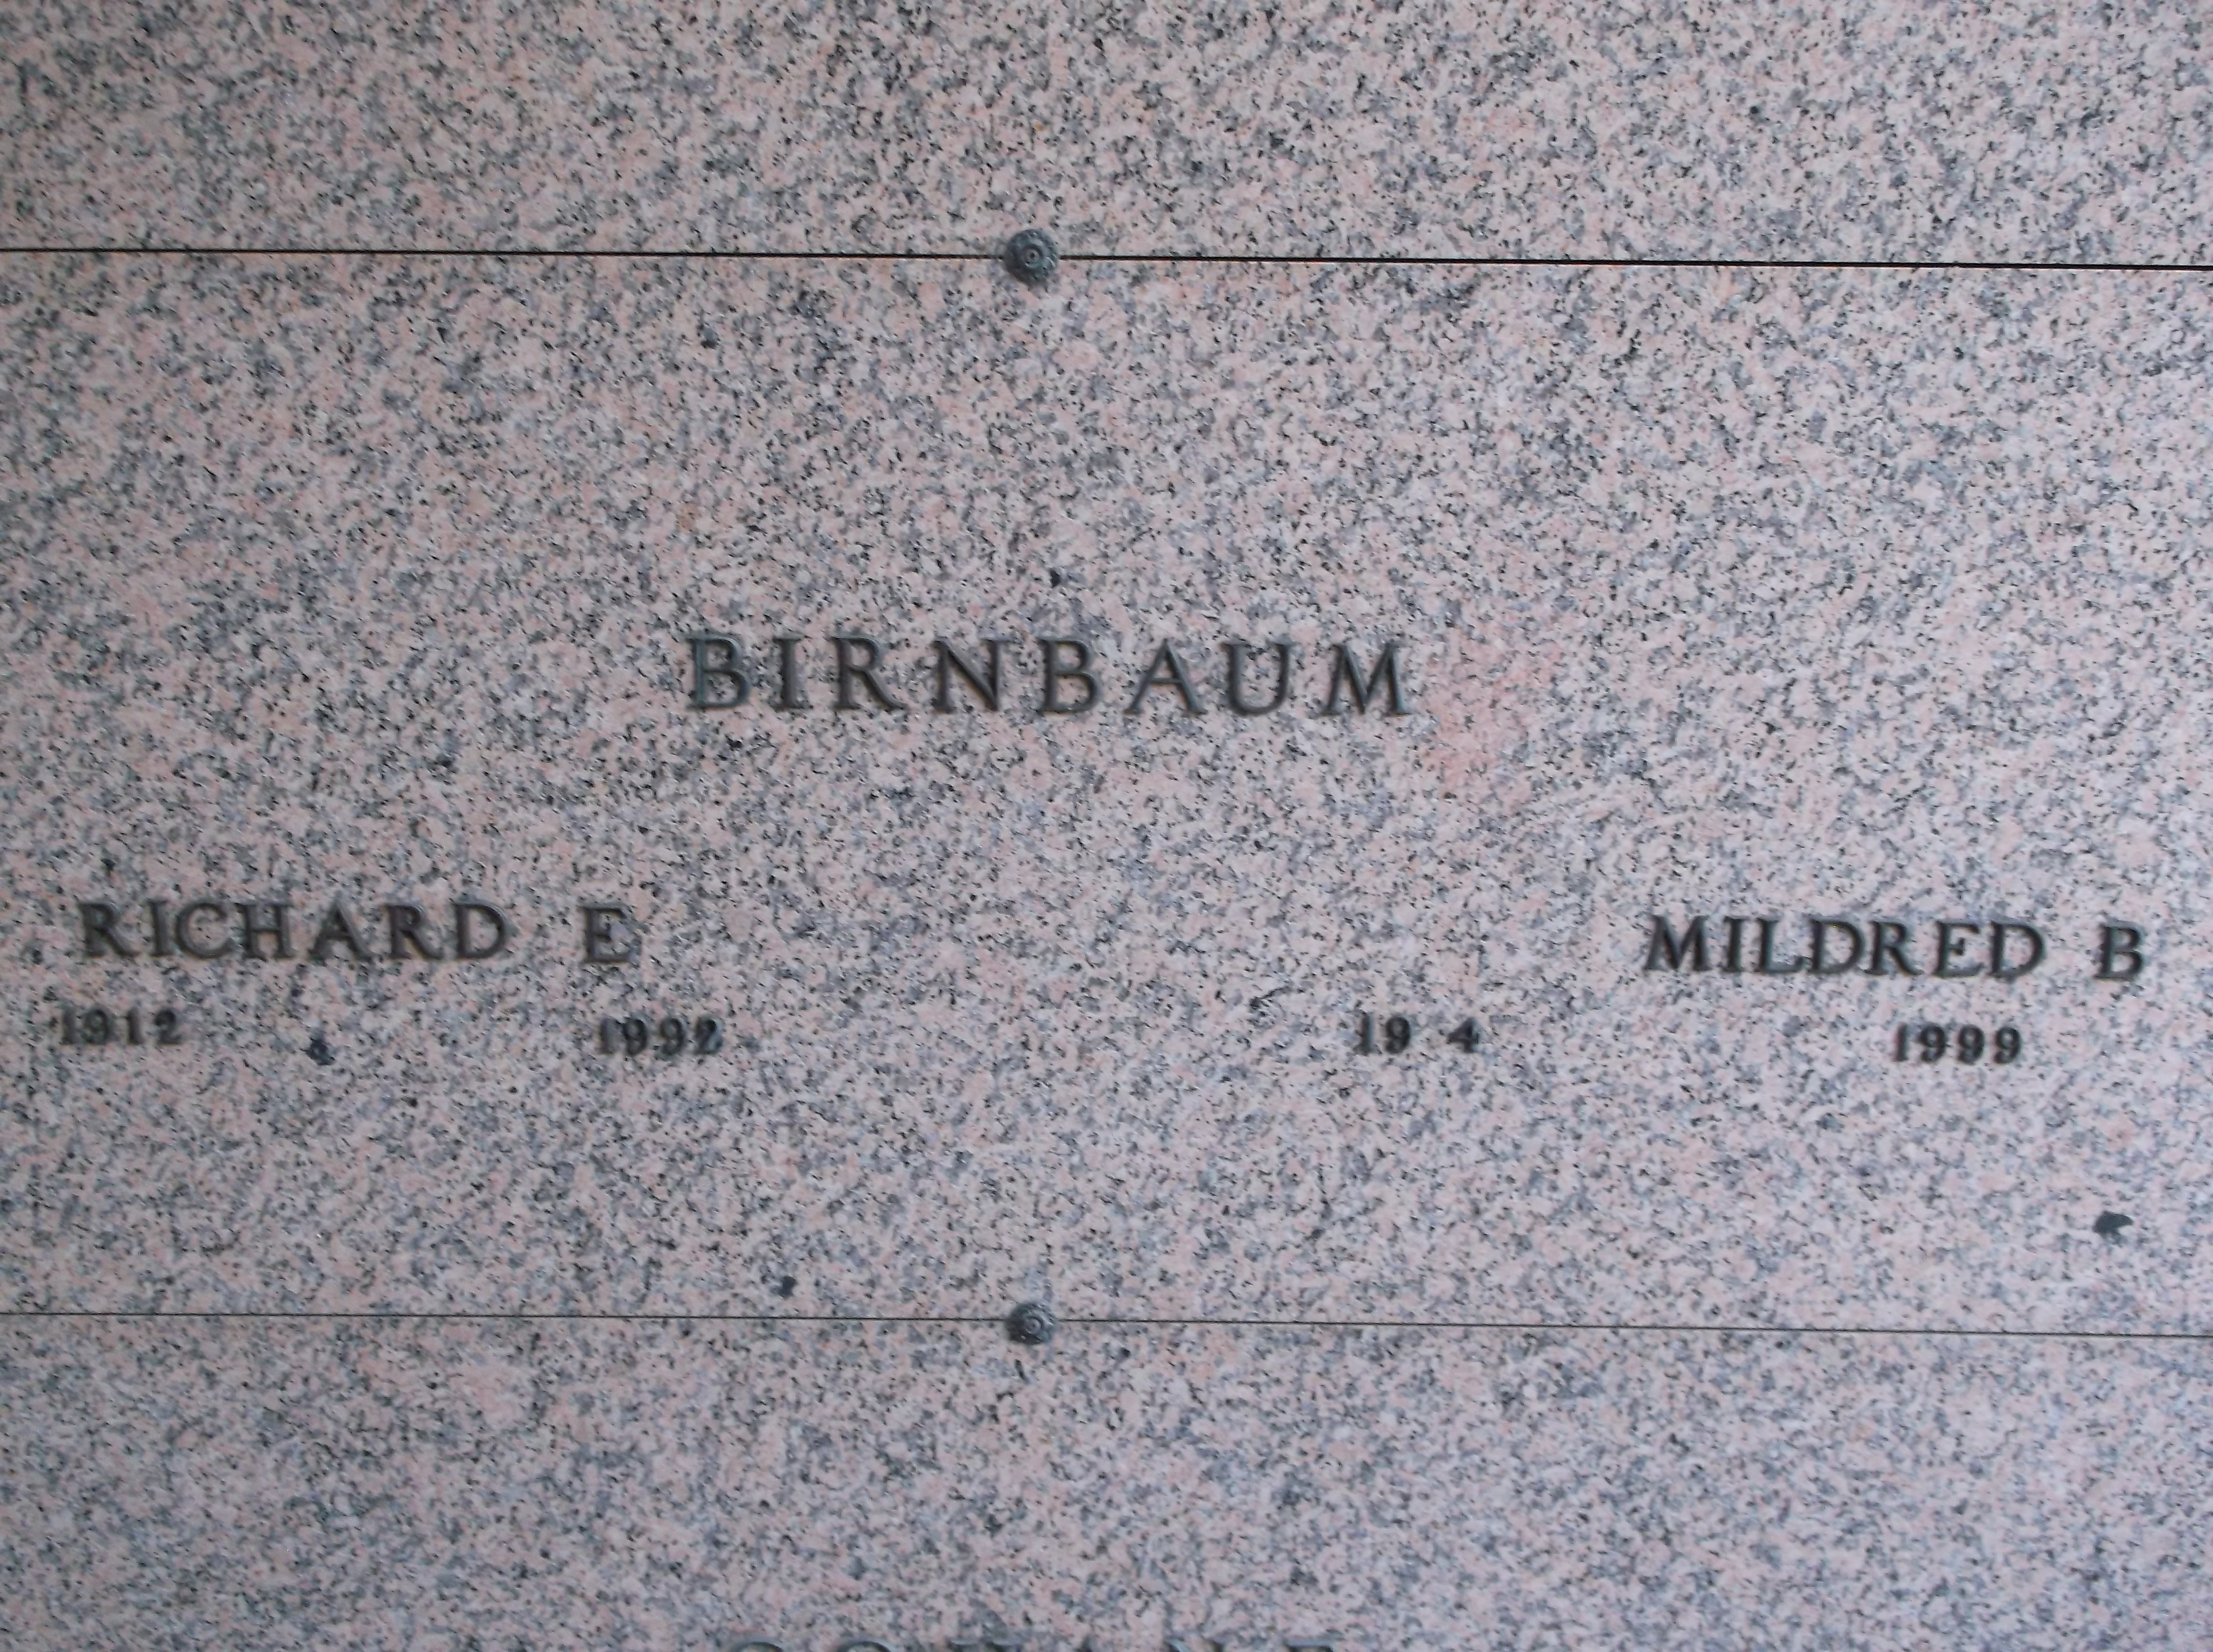 Richard E Birnbaum